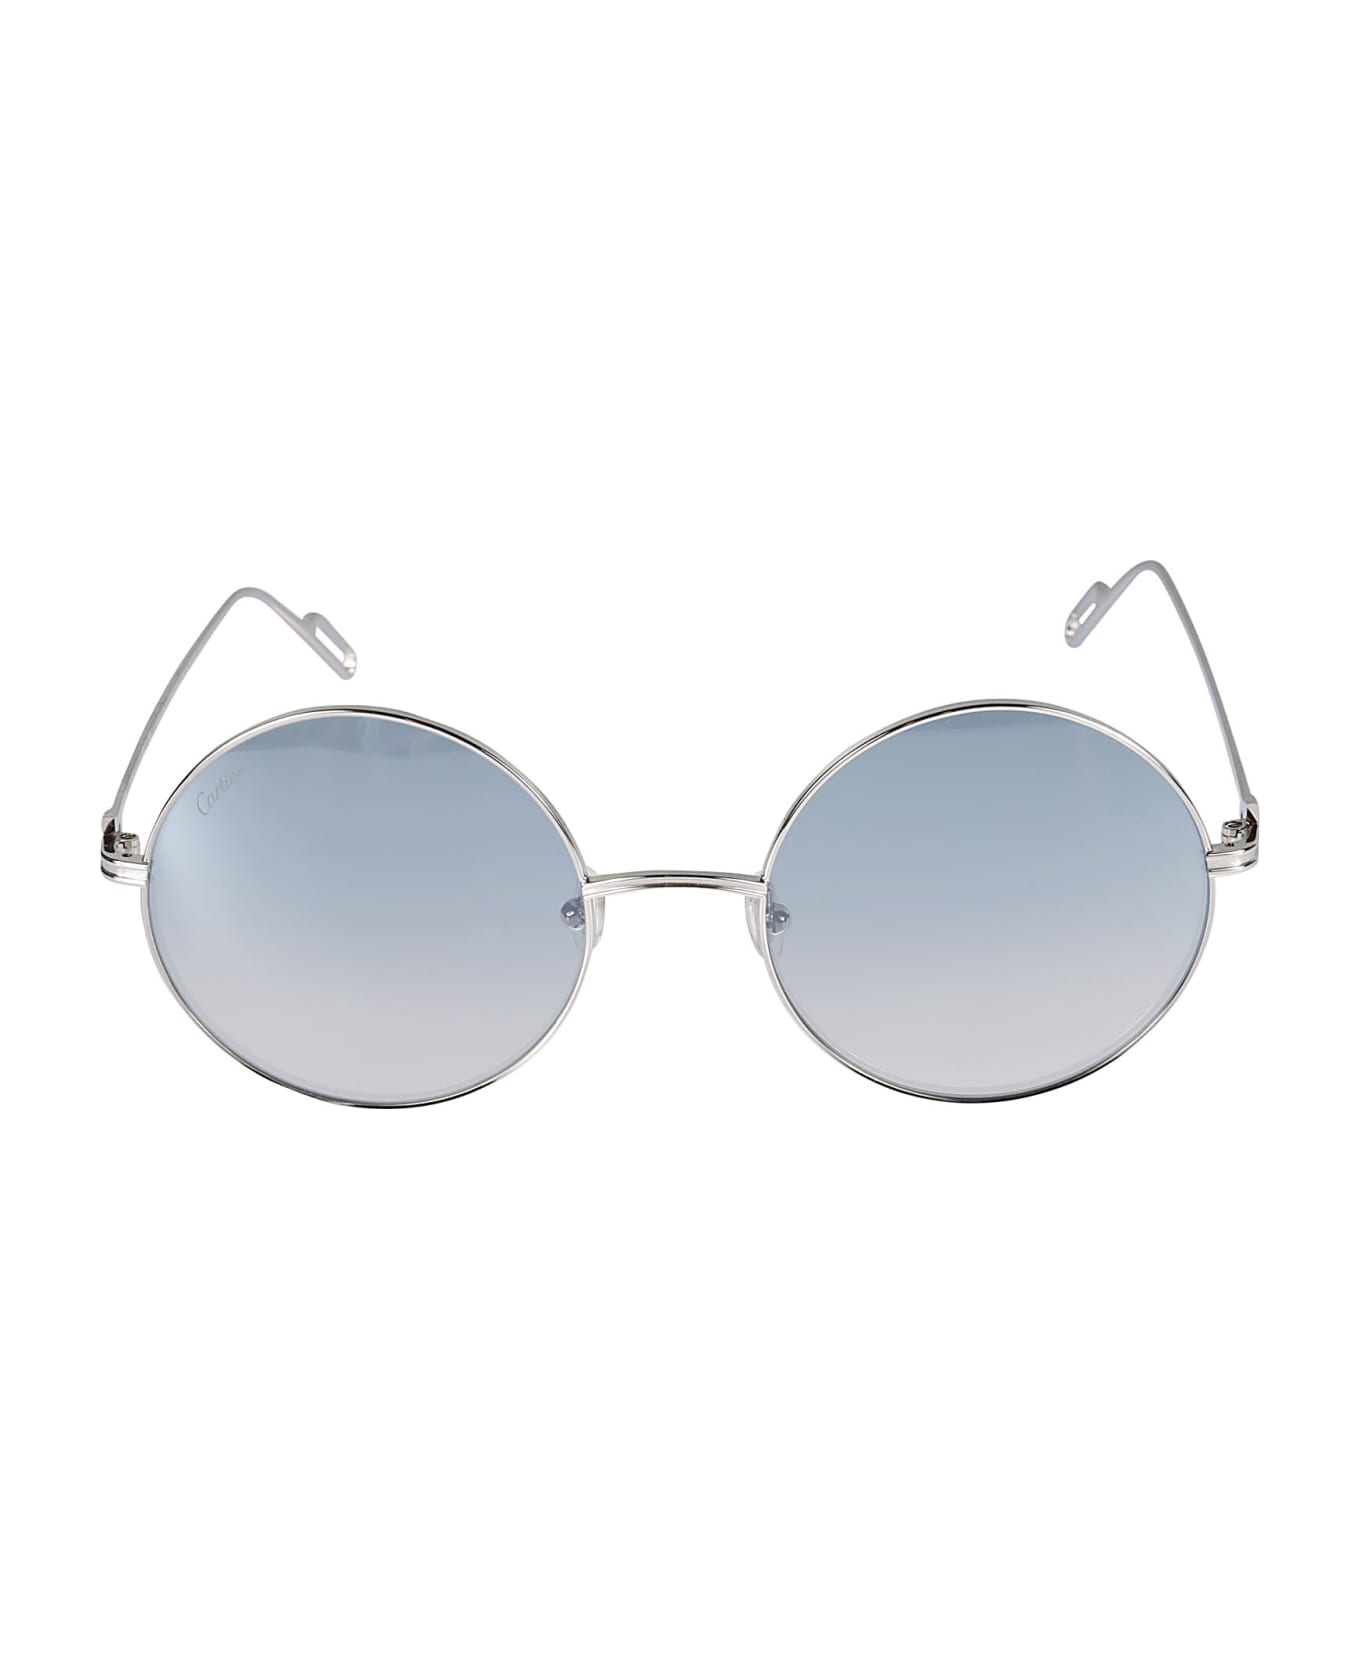 Cartier Eyewear Premiere De Cartier Sunglasses - 006 silver silver blue